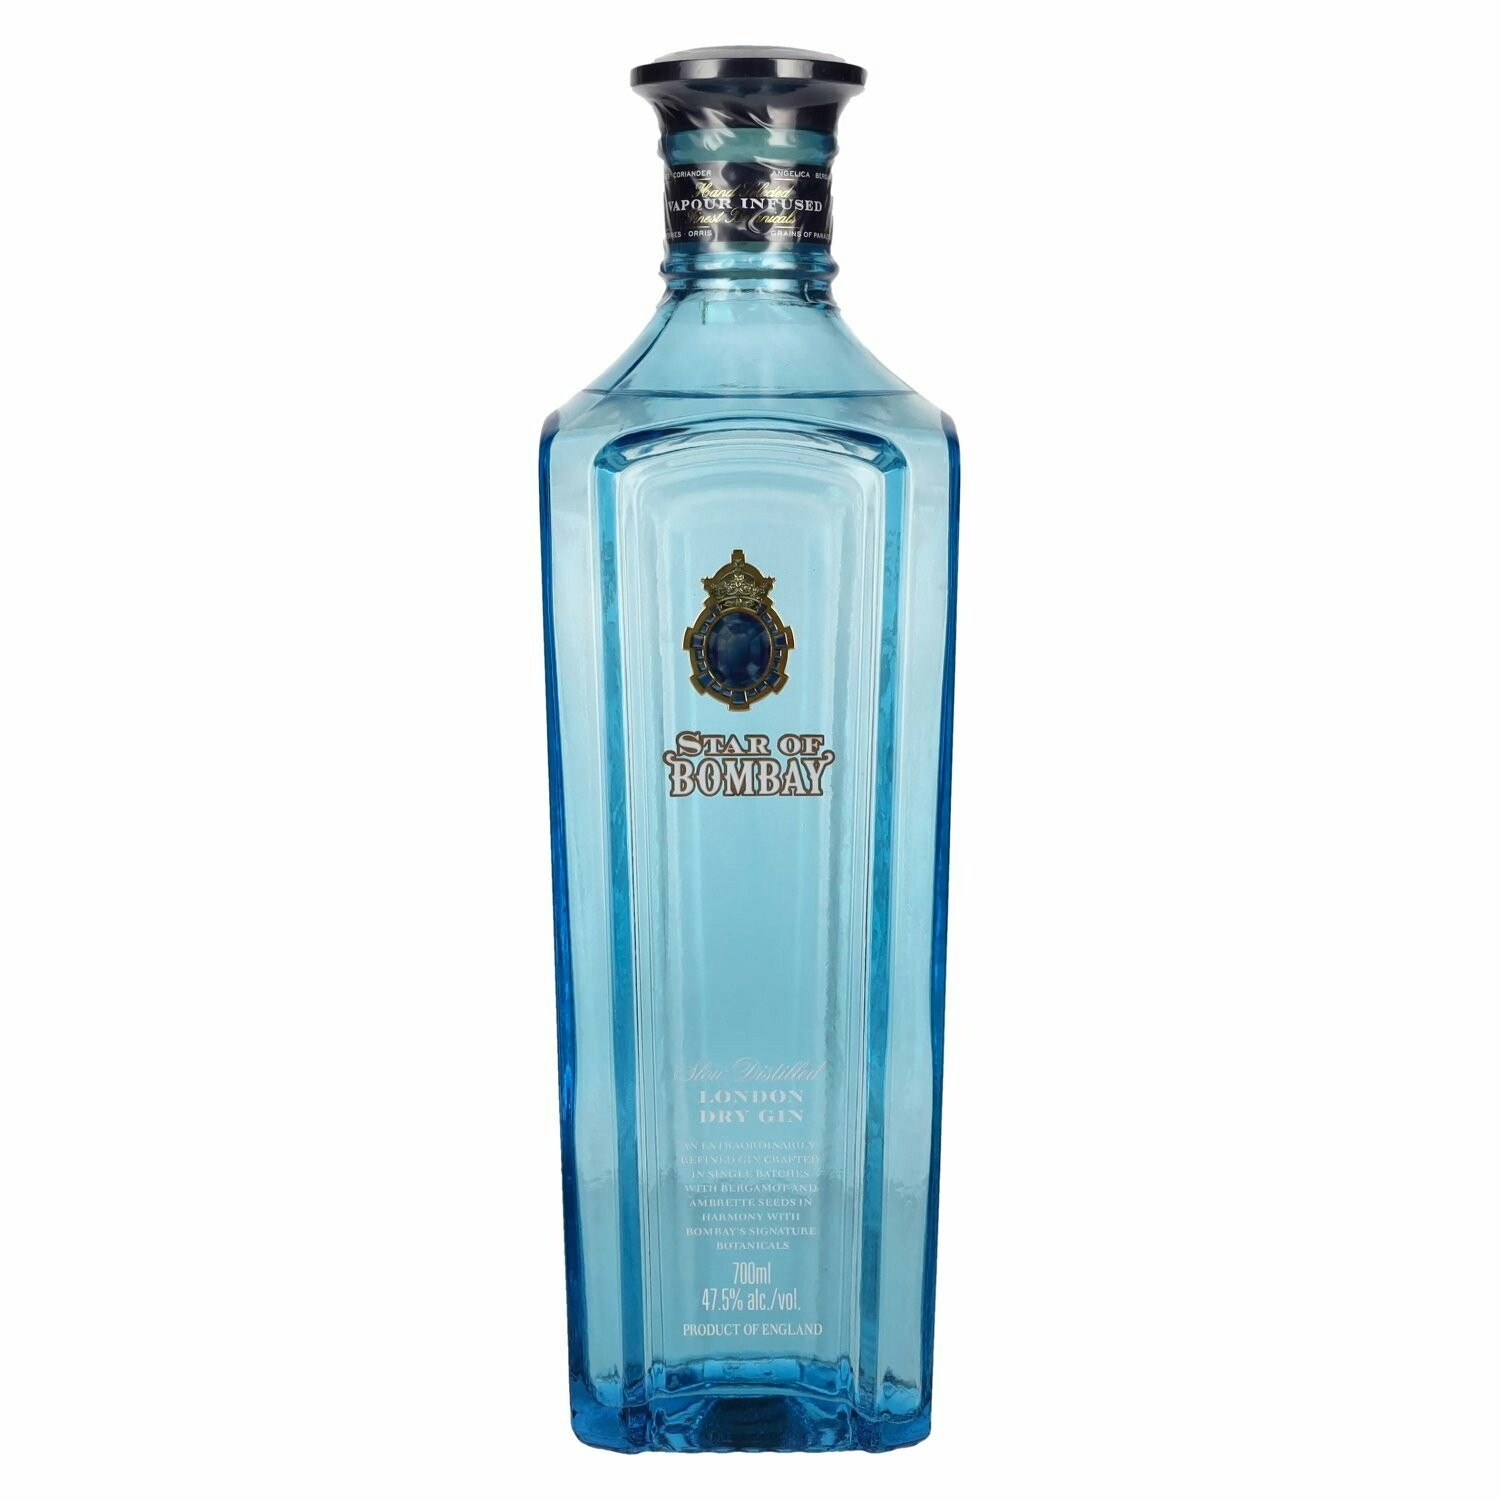 Bombay STAR OF BOMBAY Distilled London Dry Gin 47,5% Vol. 0,7l